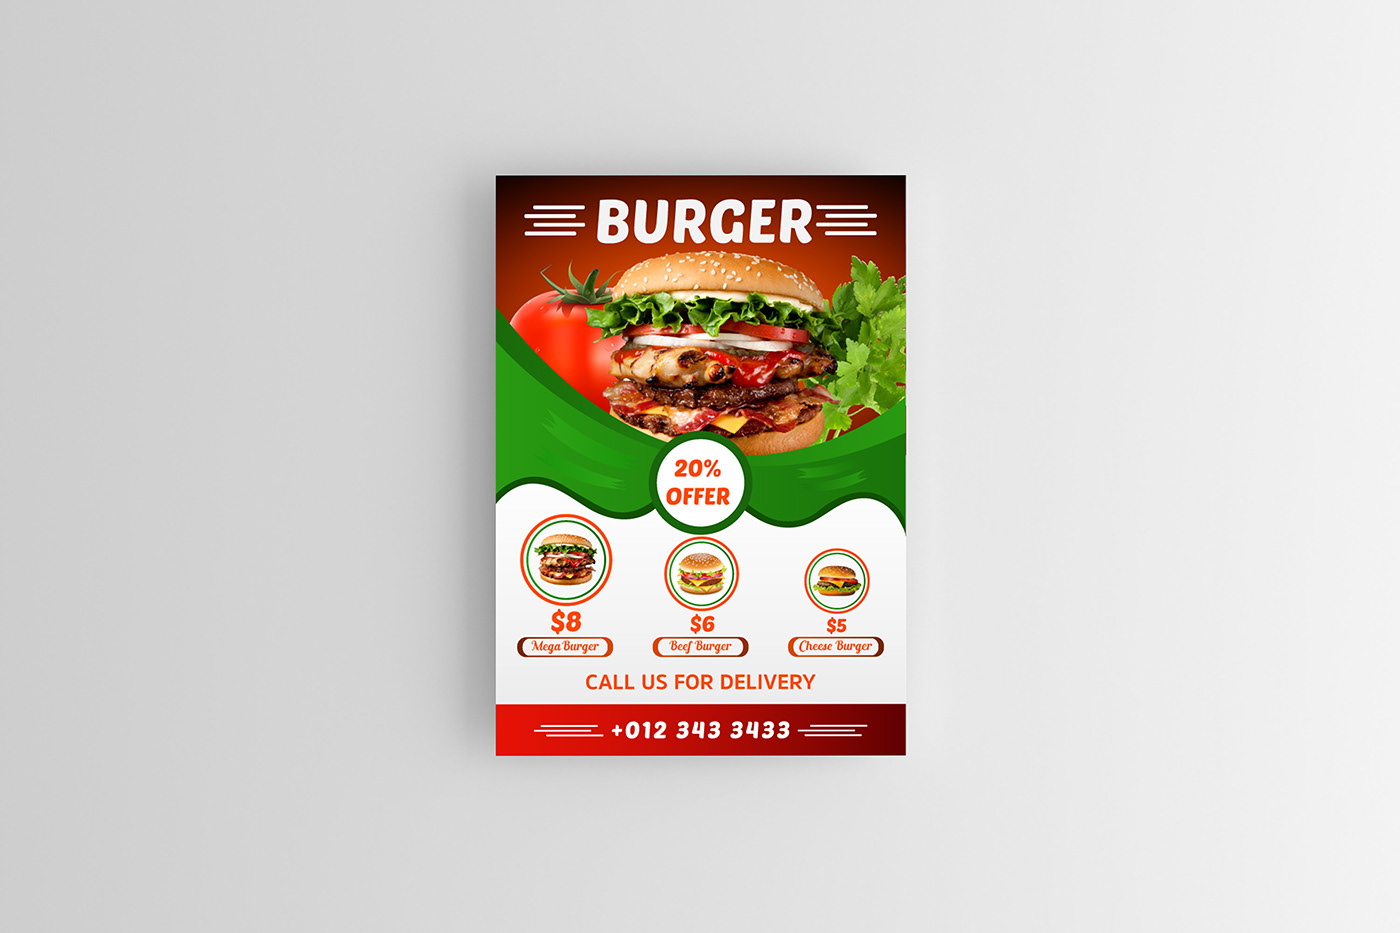 #burger menu design #burger poster design #burger png #burger banner #burger poster psd #burger menu template #burger template #templates #burger flyer #flyer design